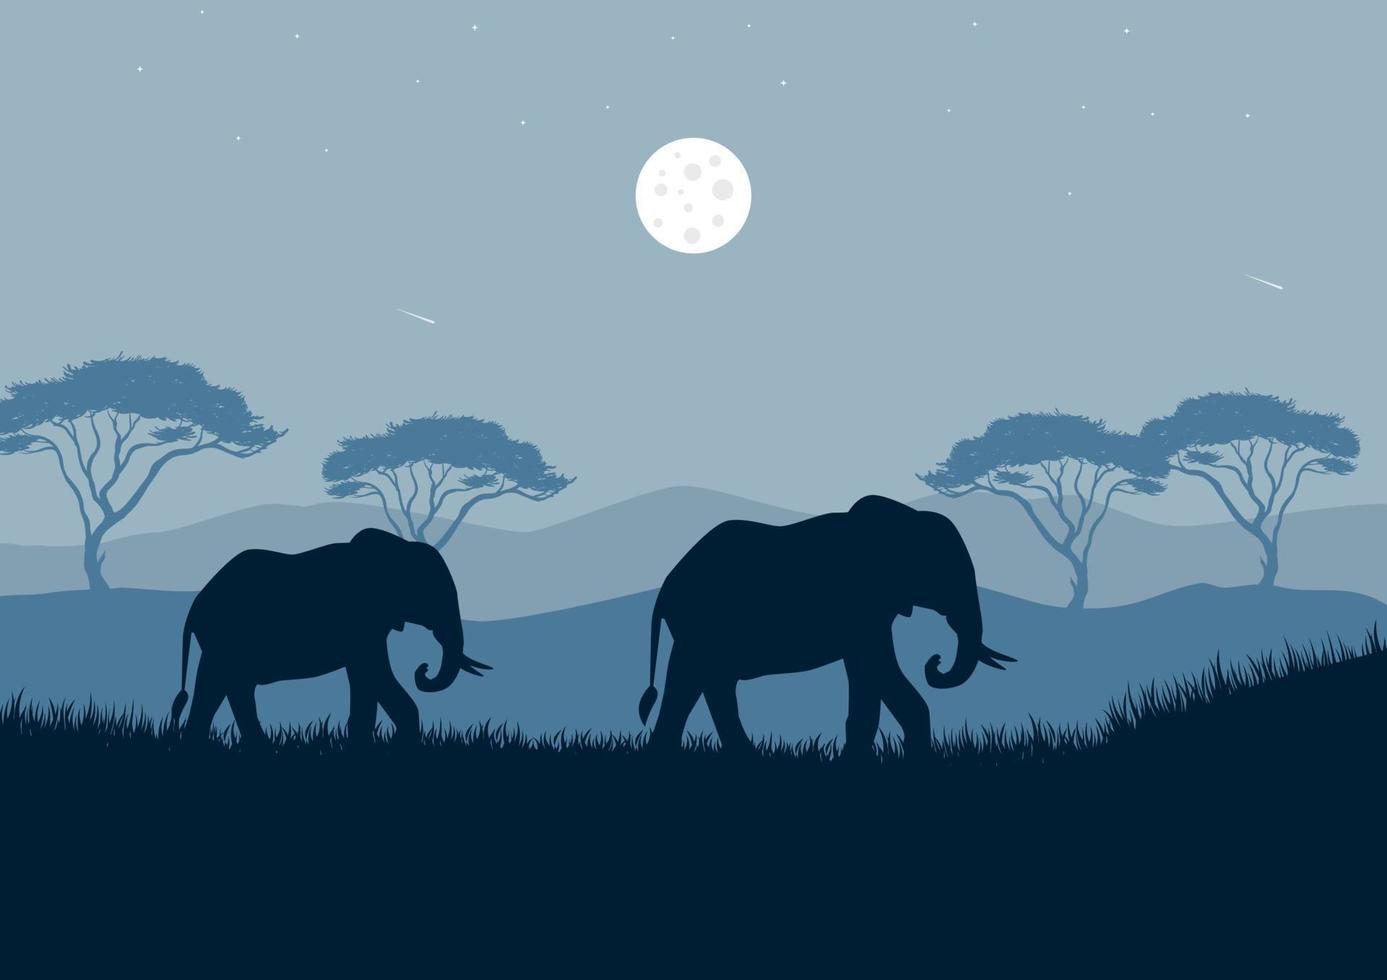 Elephants in the savannah at night. Vector illustration.